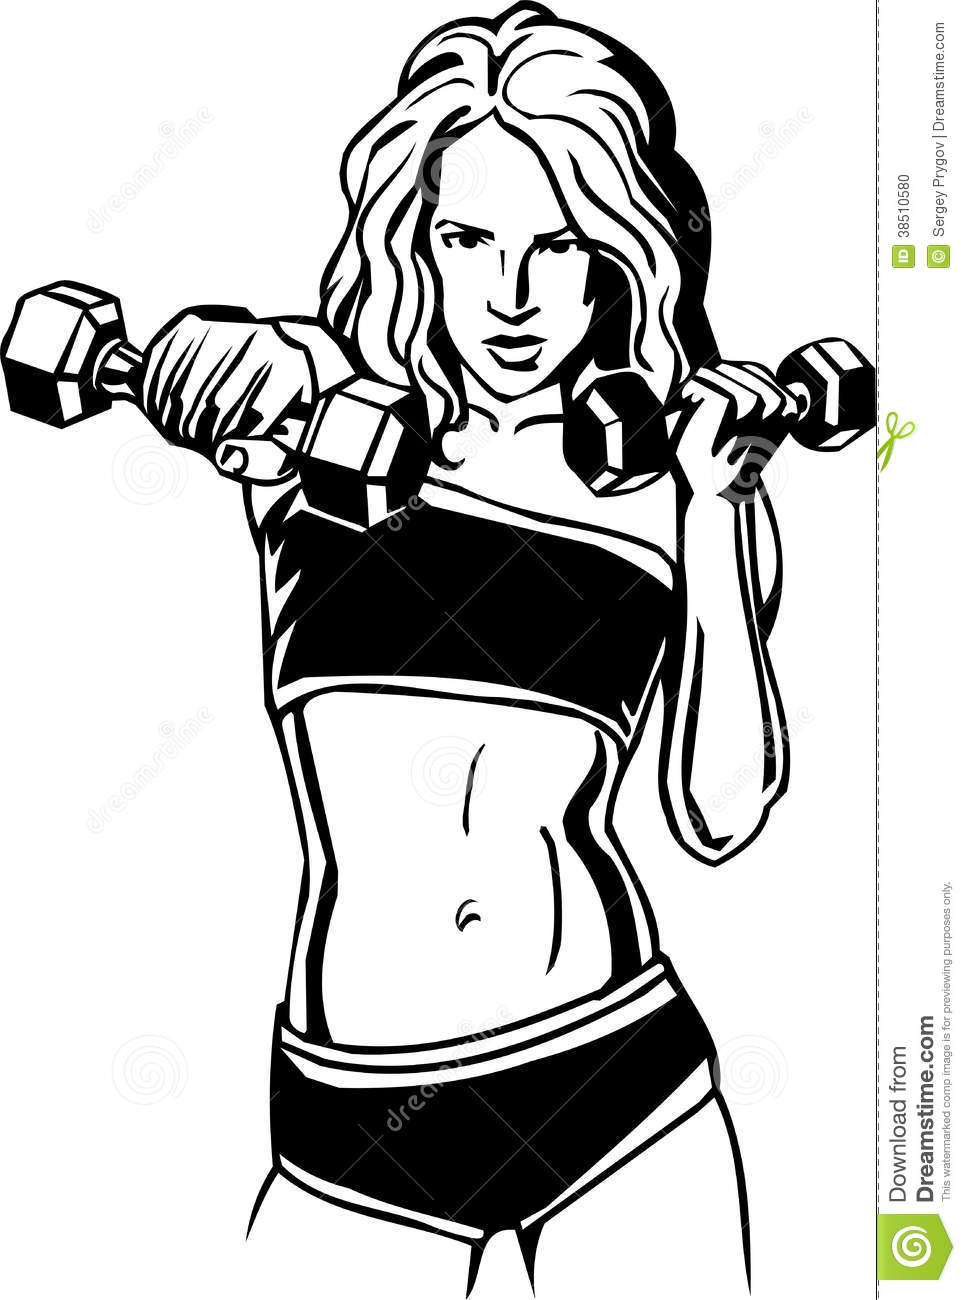 Women S Fitness   Vector Illustration  Stock Photo   Image  38510580